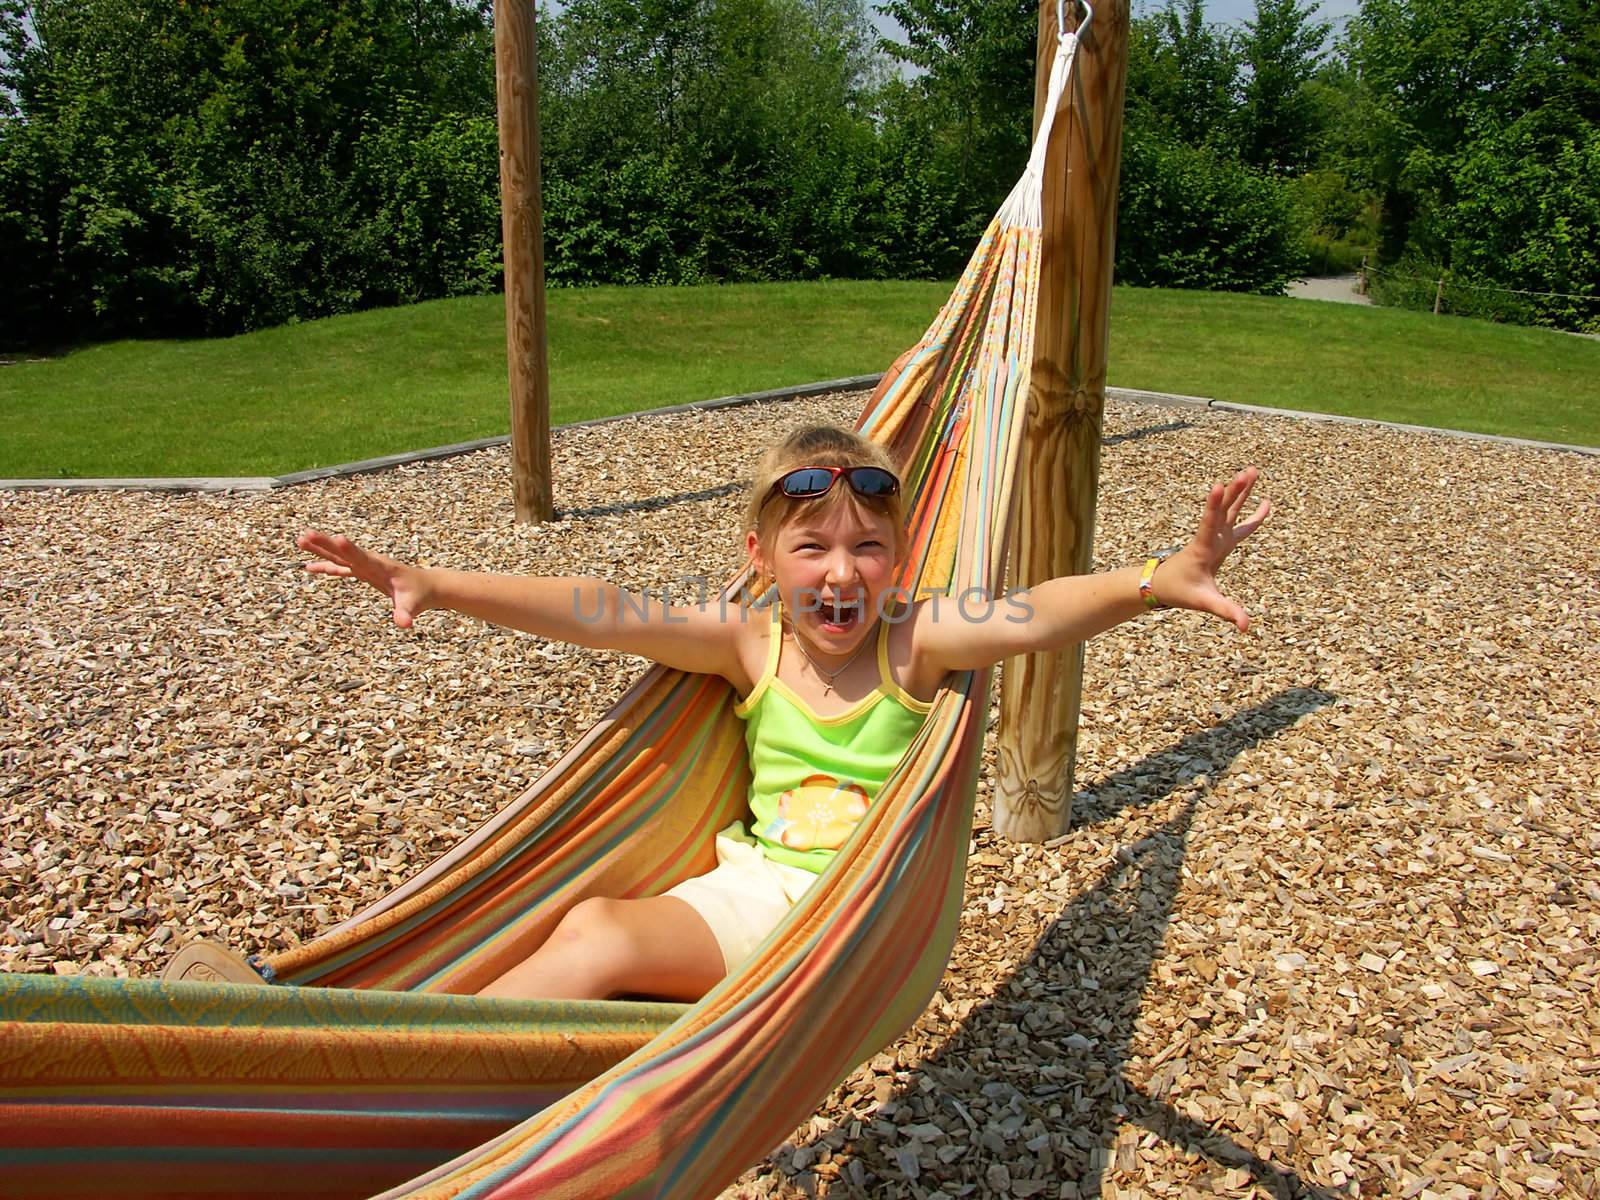 The joyful girl in a hammock. Germany.